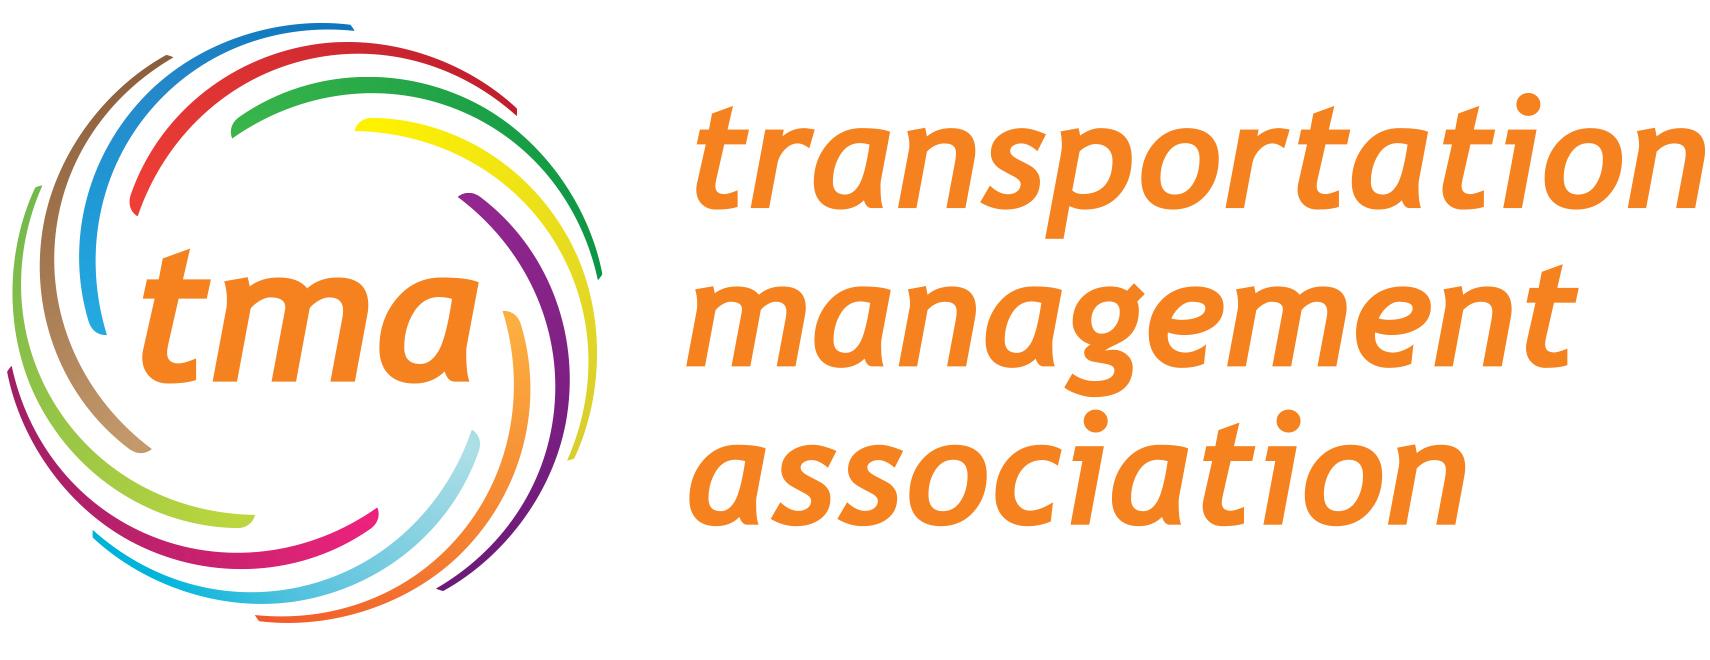 TMA Logo - TMA Logo MASTER Alliance Of Middle Tennessee